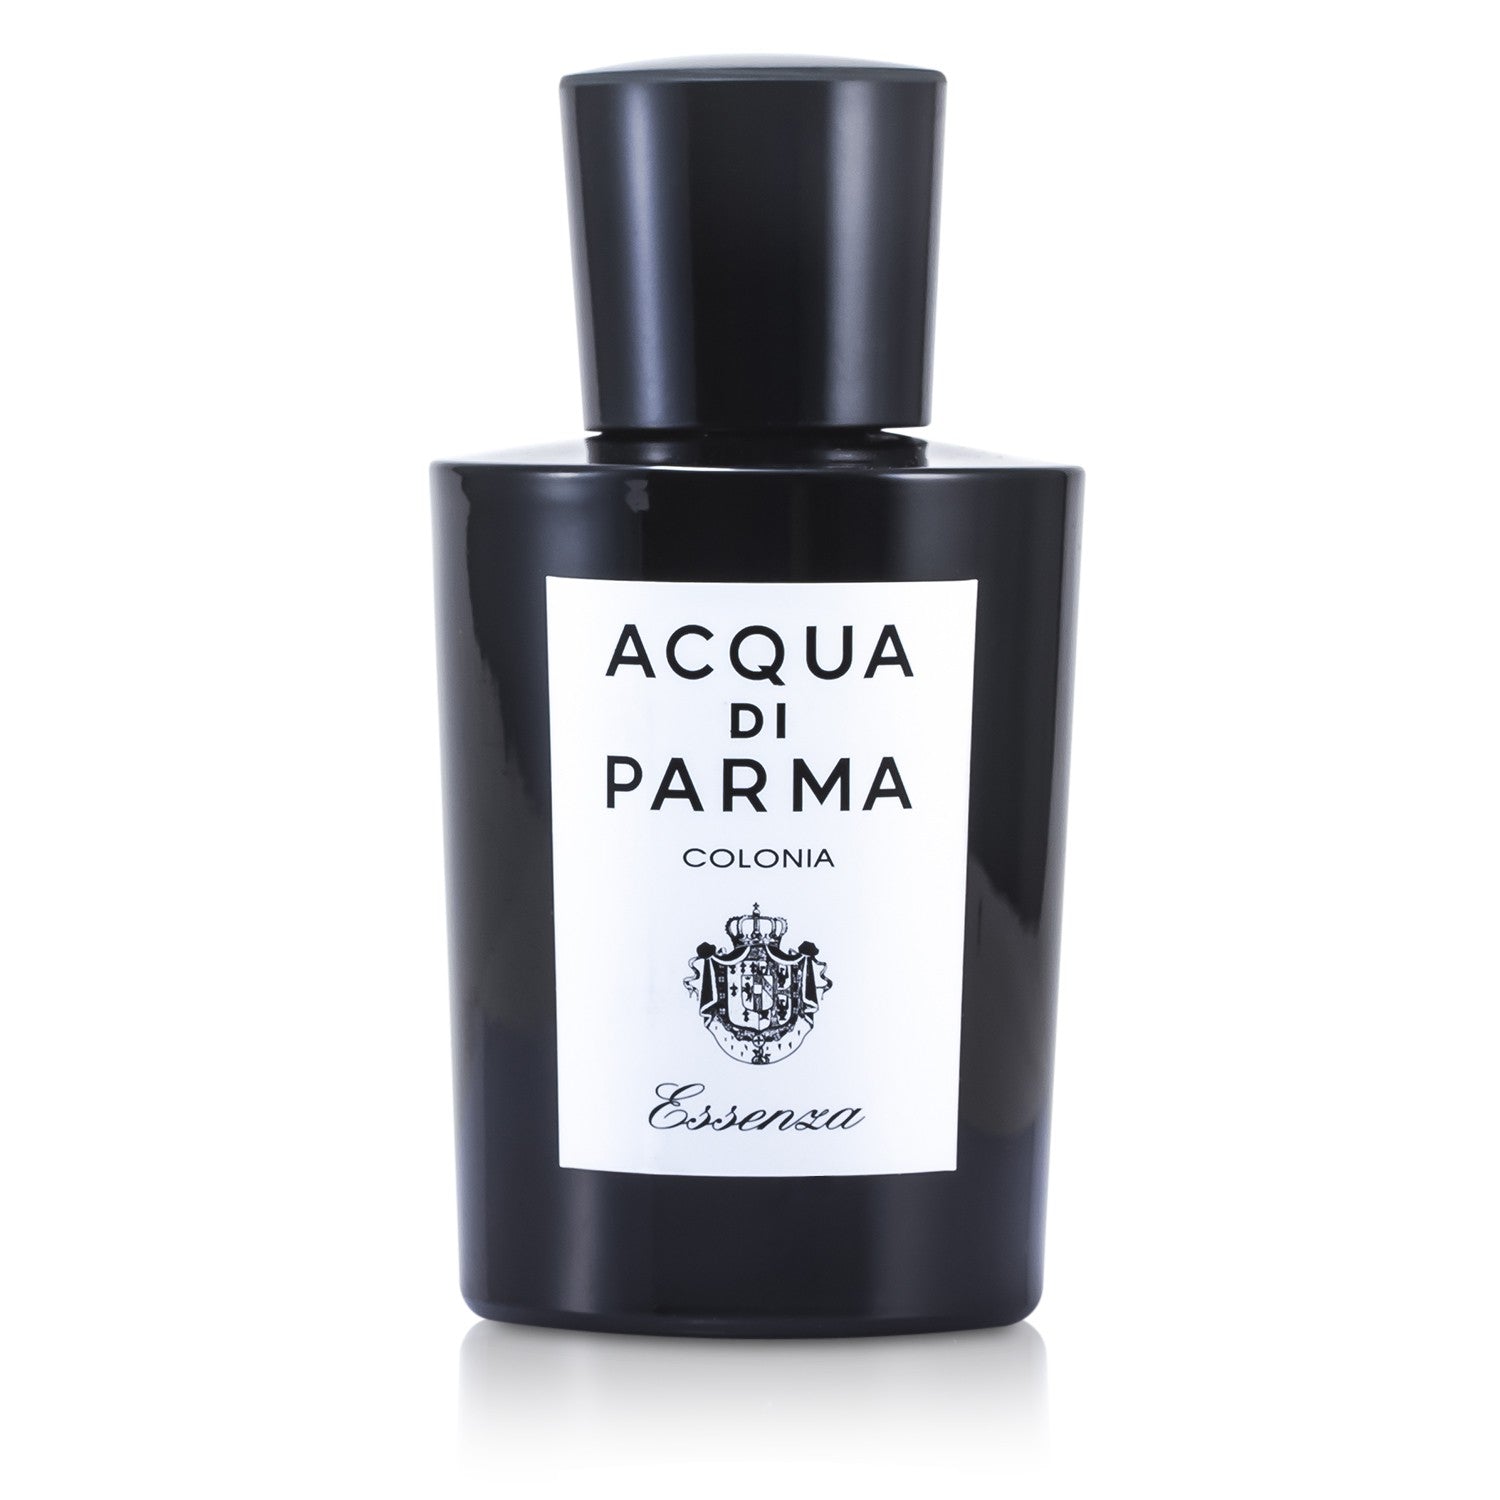 Oud by Acqua Di Parma Fragrance Samples, DecantX